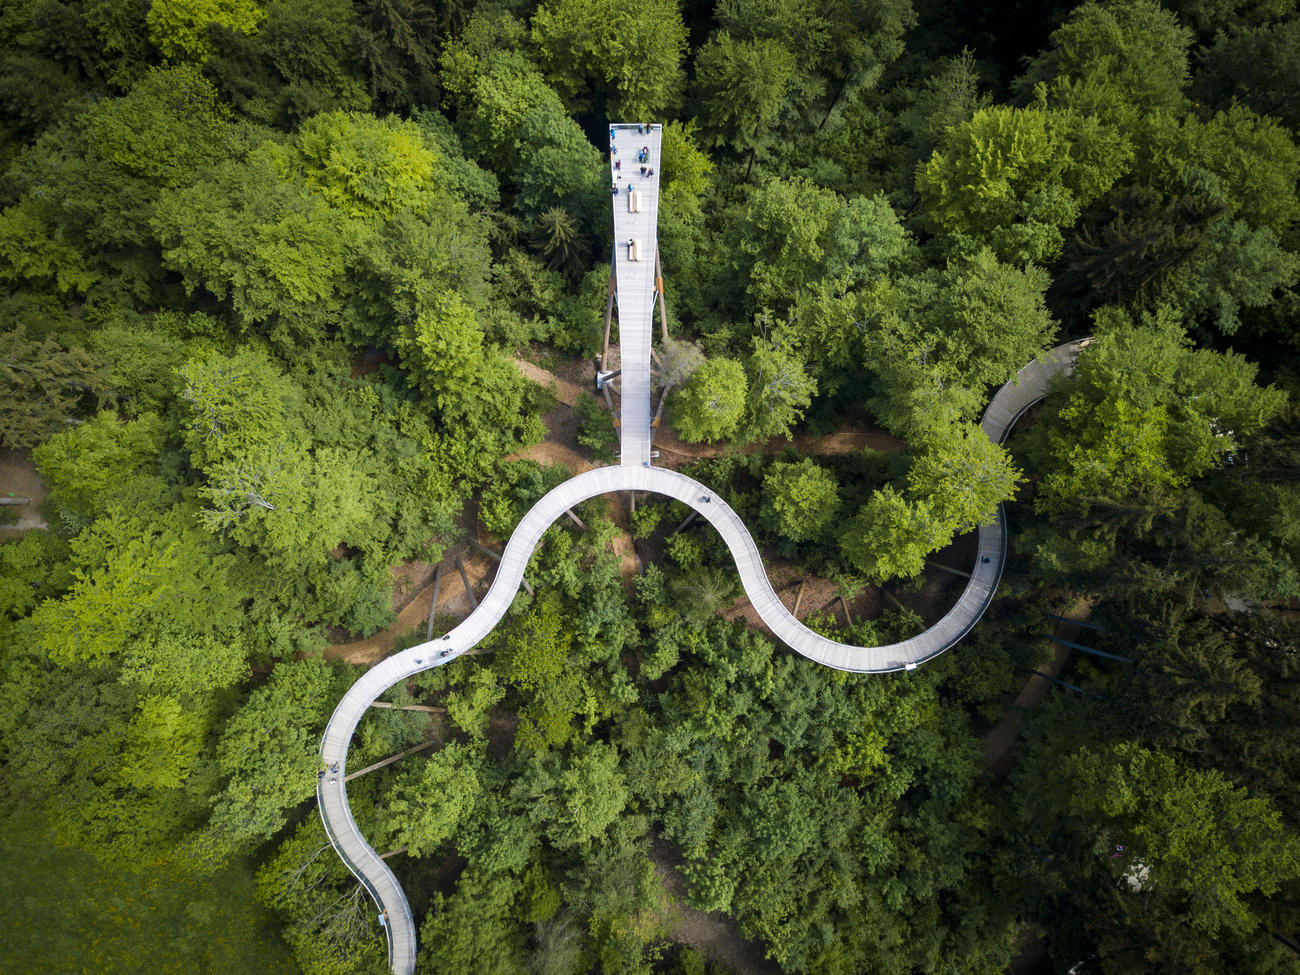 Tree-top path